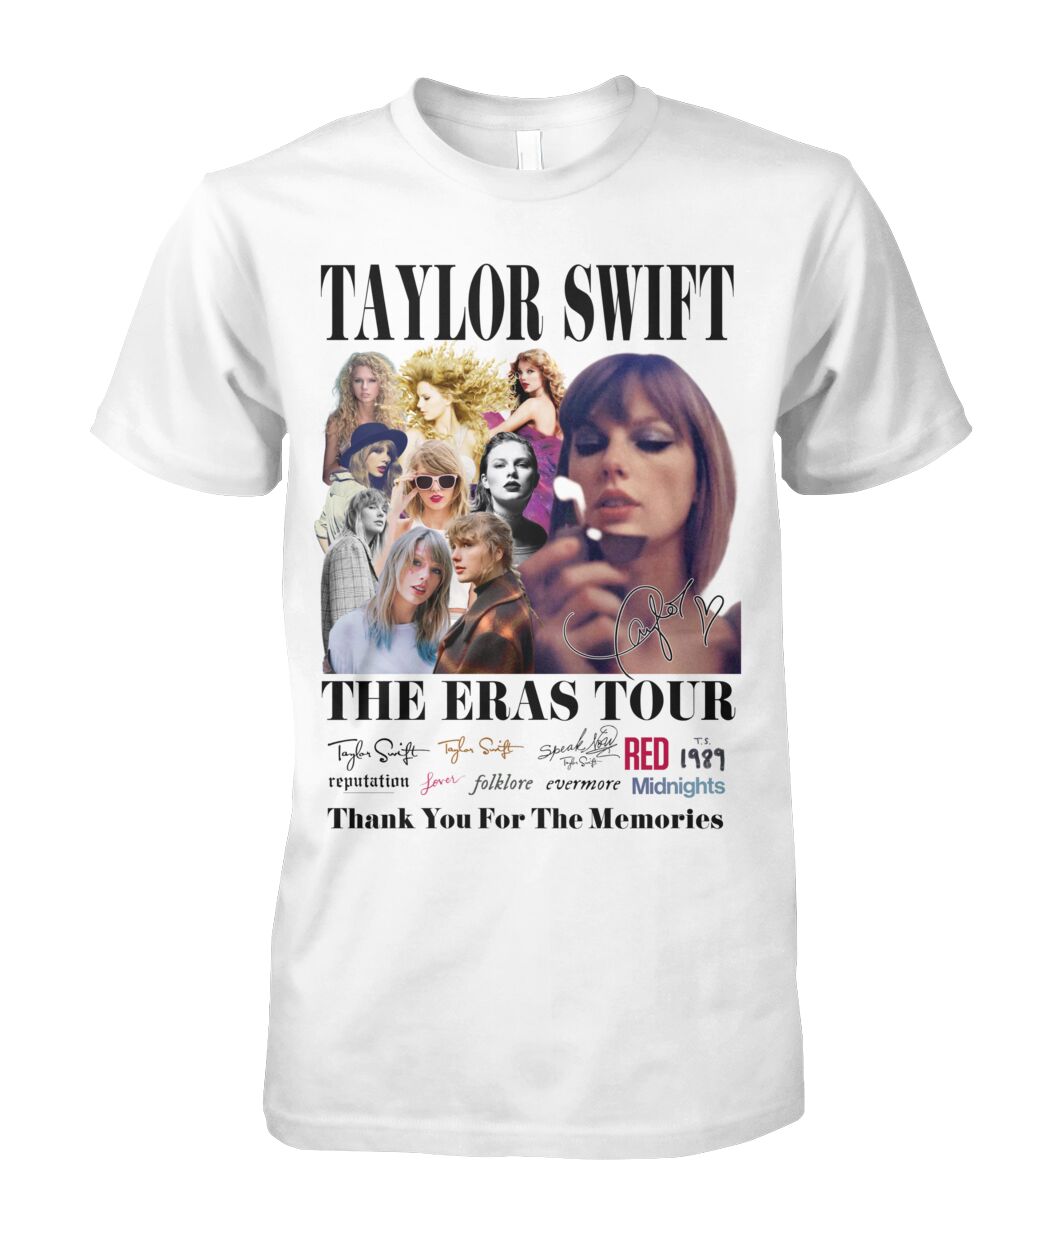 taylor swift the eras tour shirt 4141 mntlz